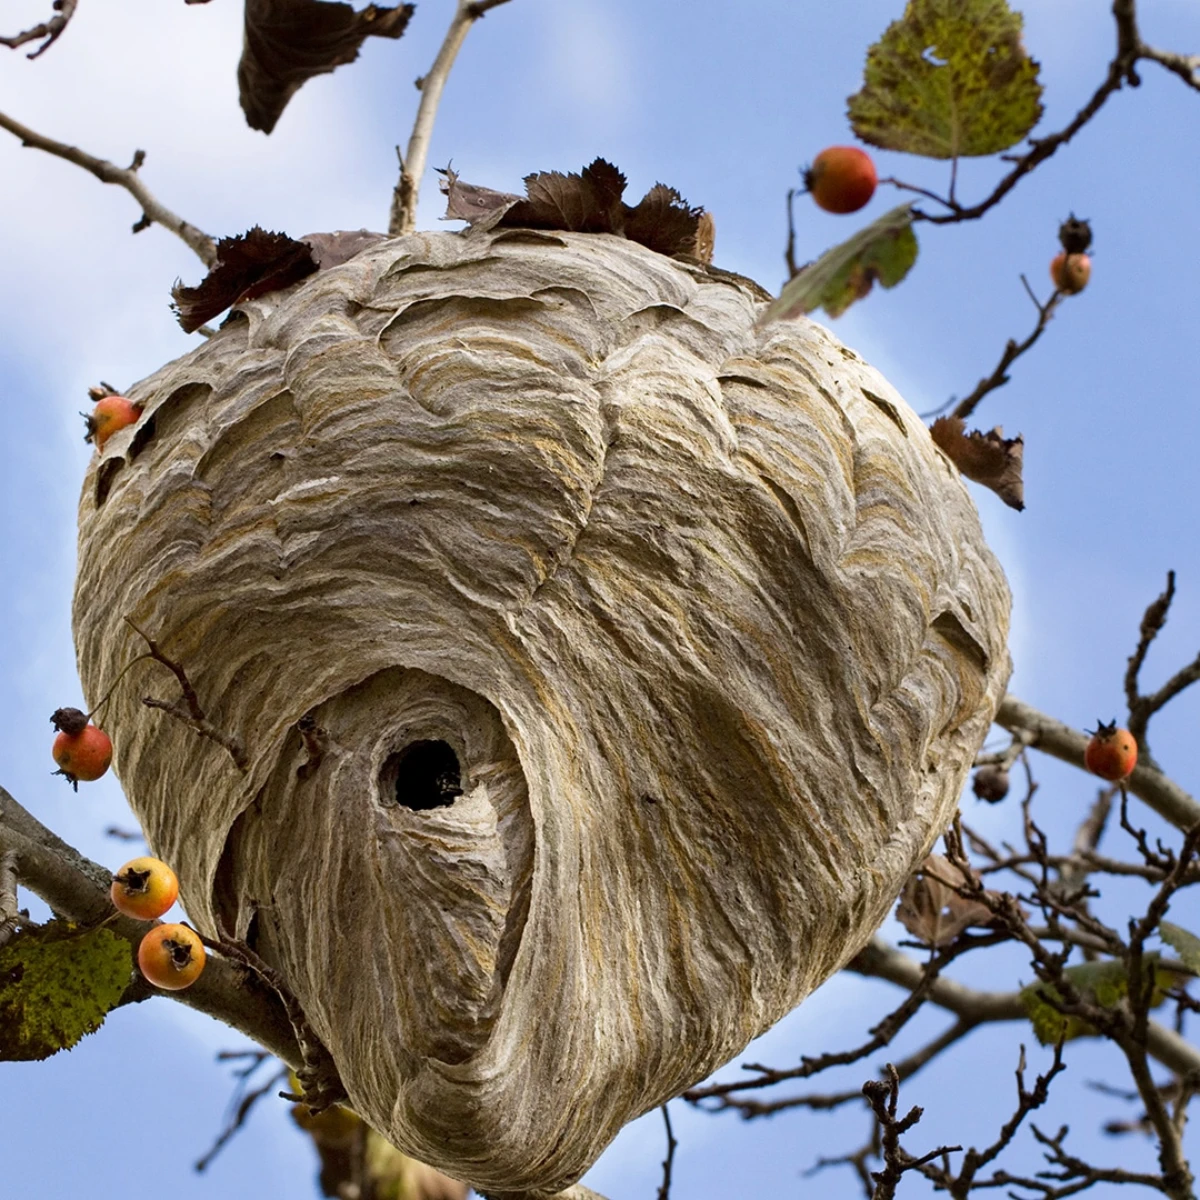 wasp nest papery nest on tree